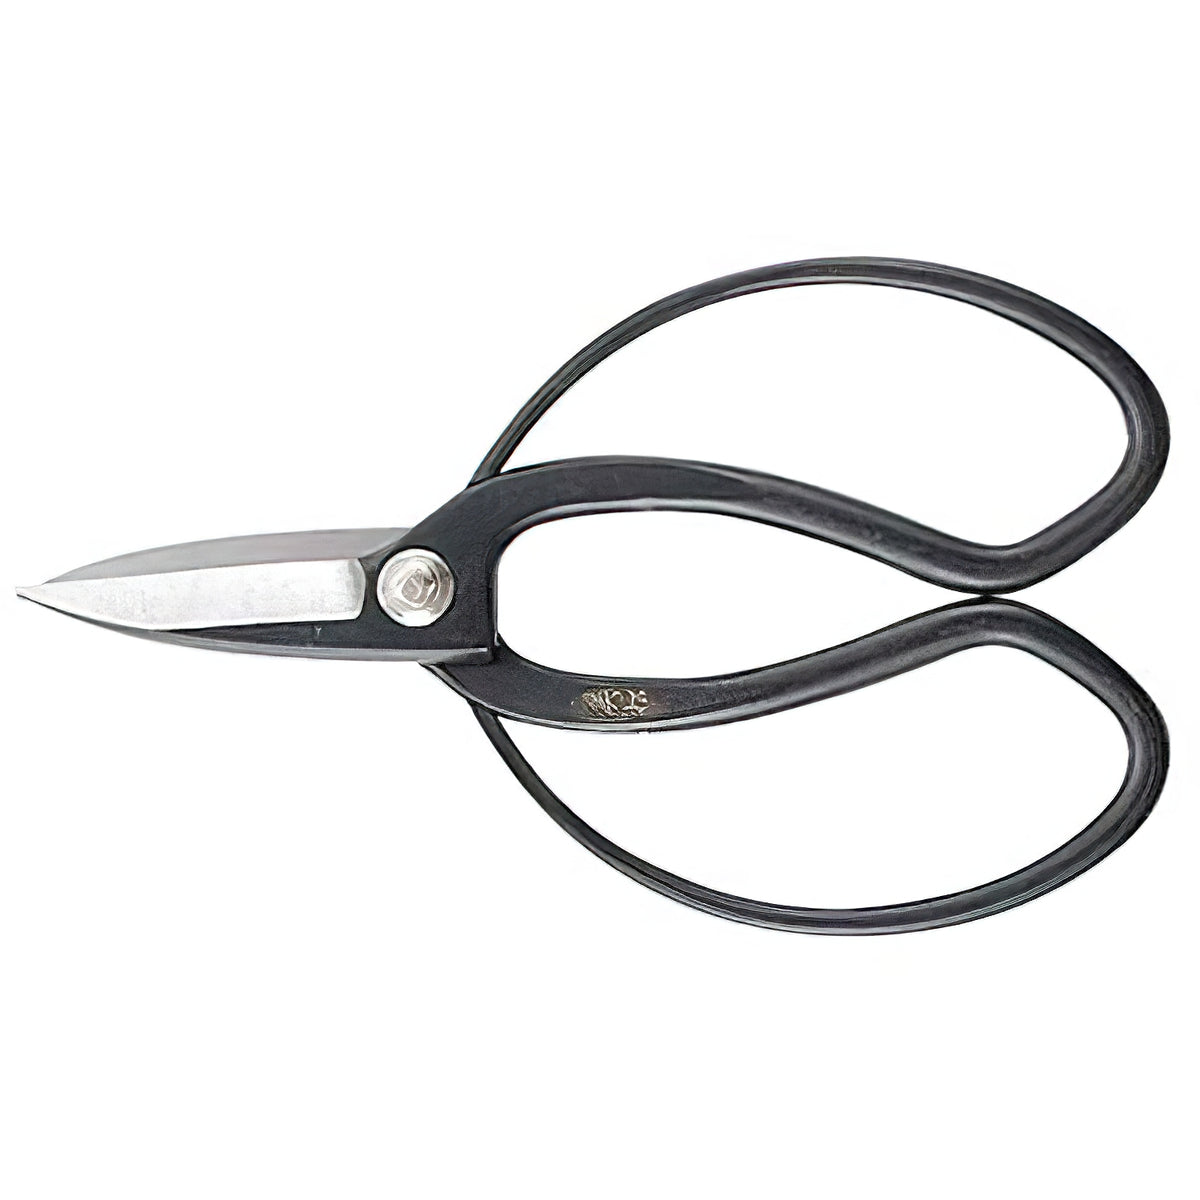 Kaneshika Tool Carbon Tool Steel Gardening Scissors